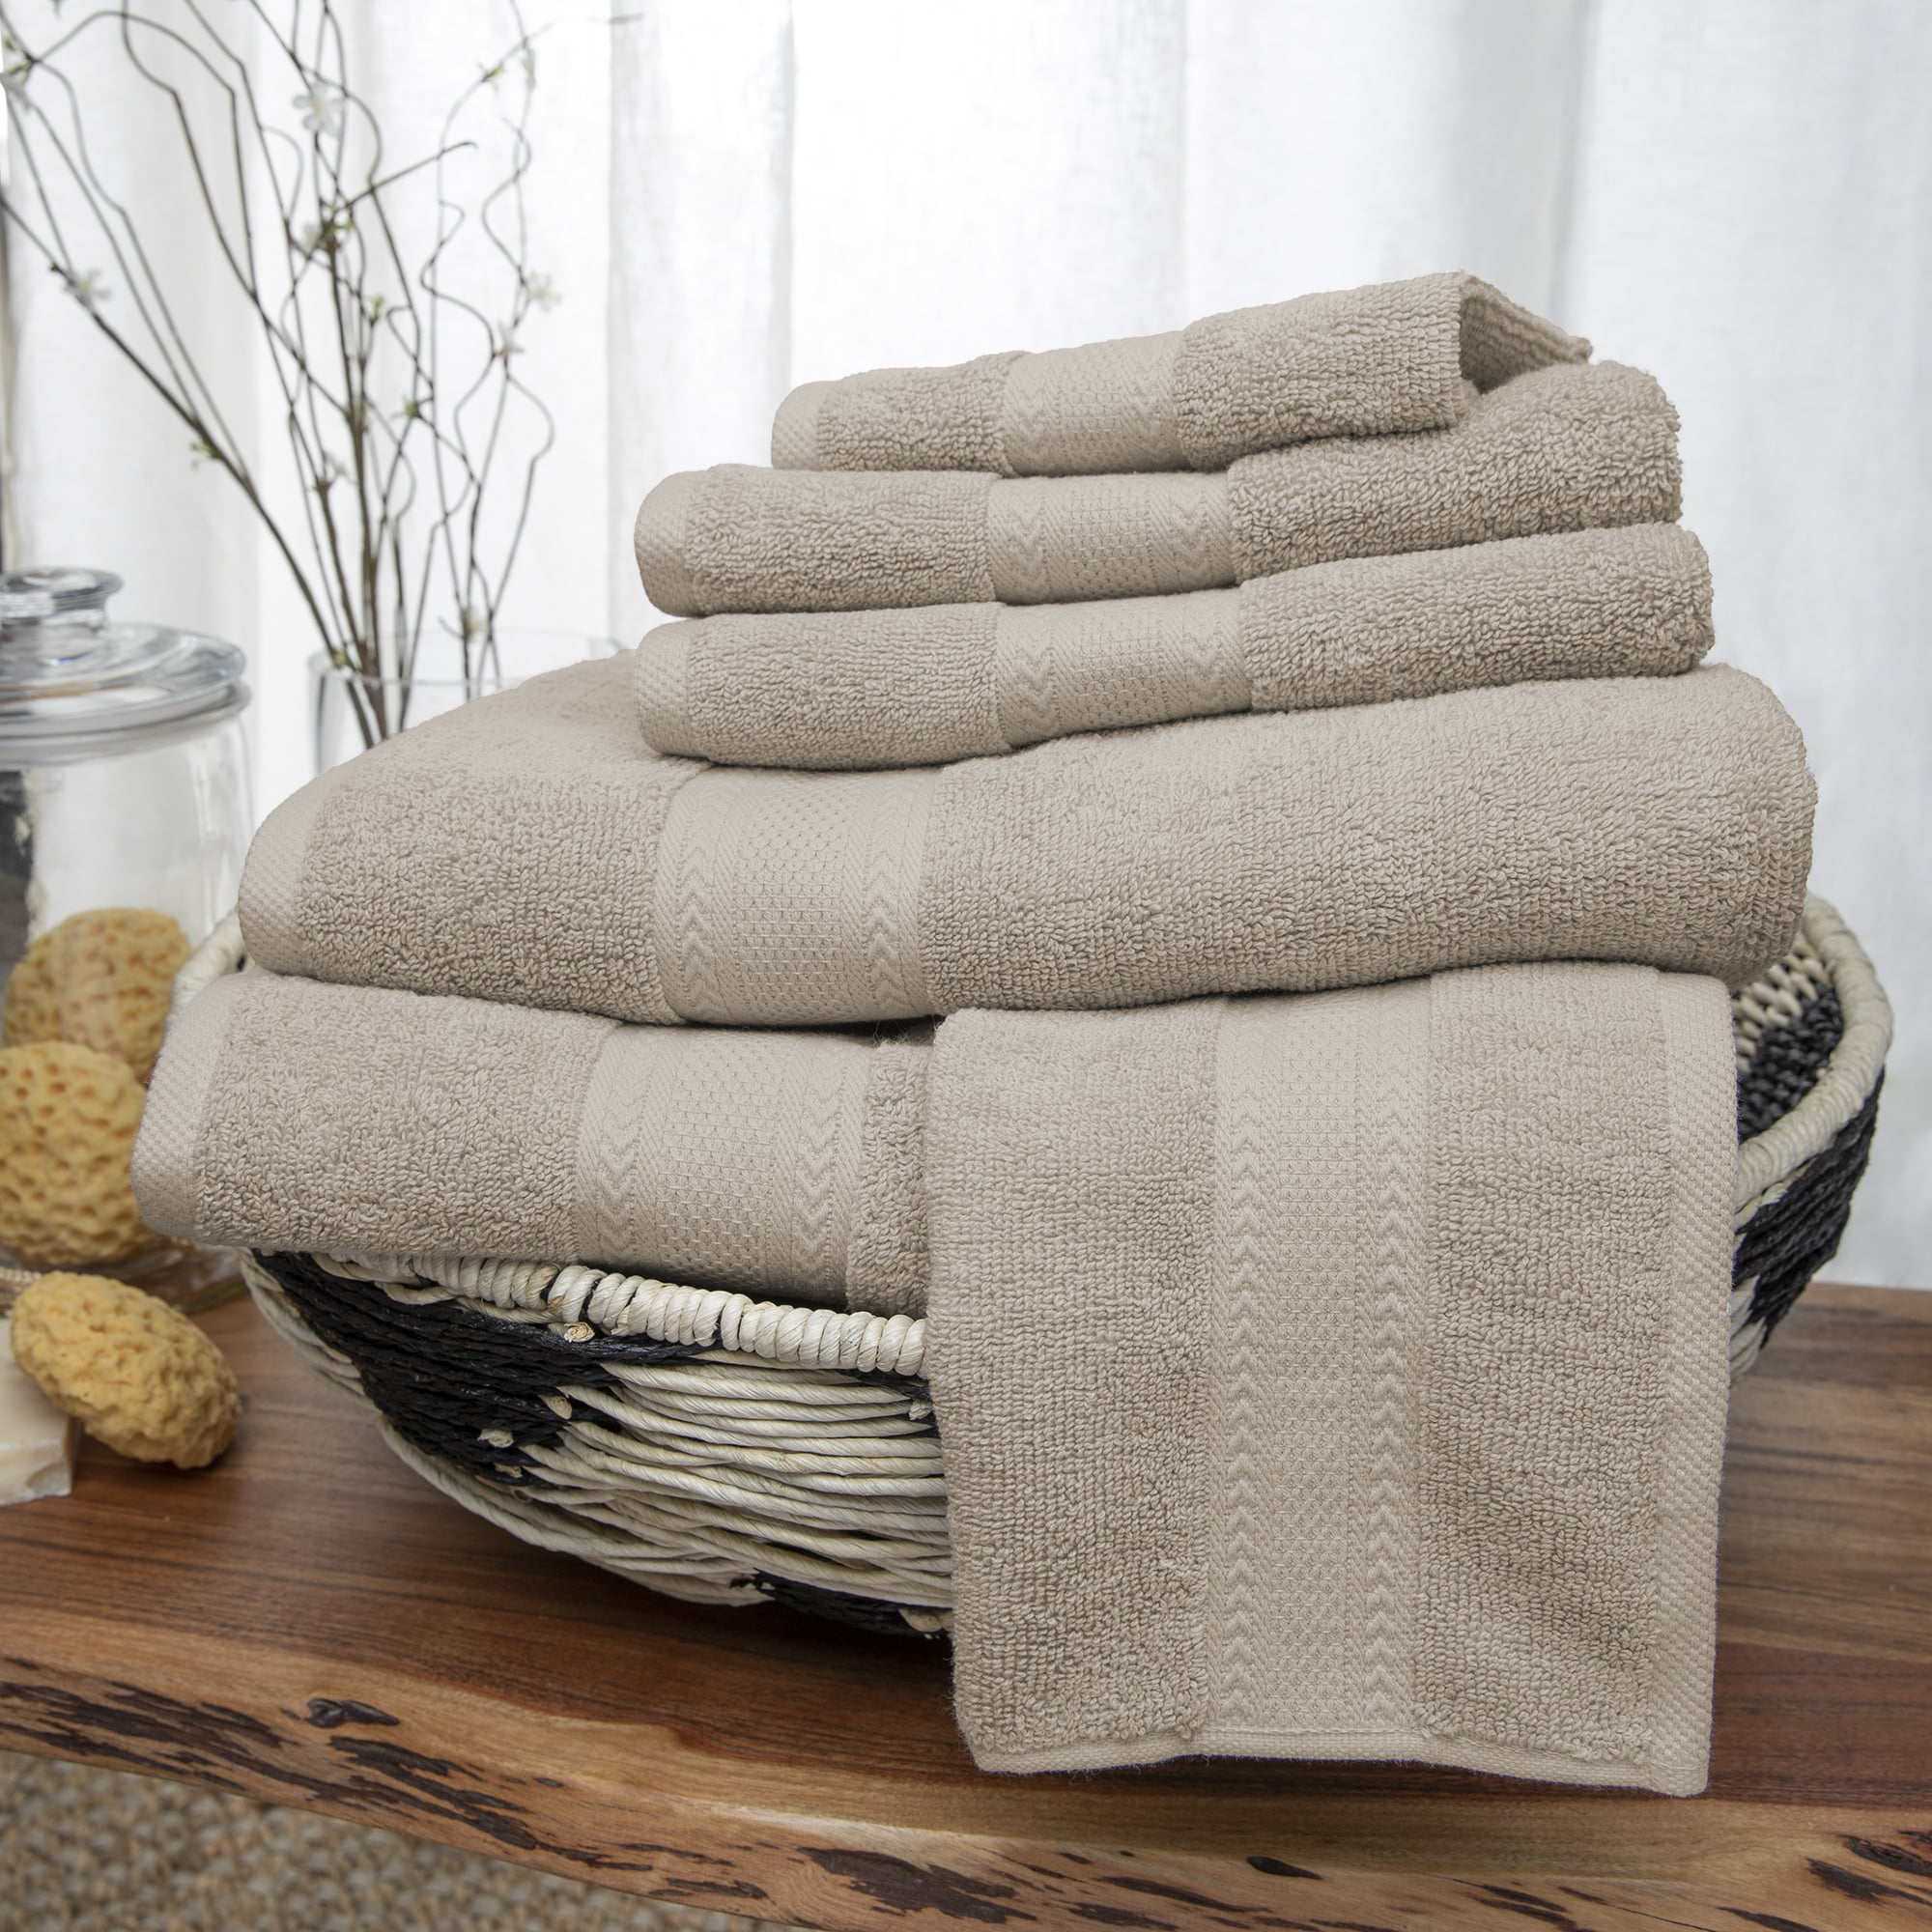 Sobel Westex Sobel Westex Pure Elegance 100-Percent Turkish Cotton 6-Piece  Luxury Towel Set - Lunar Rock 3572442100000